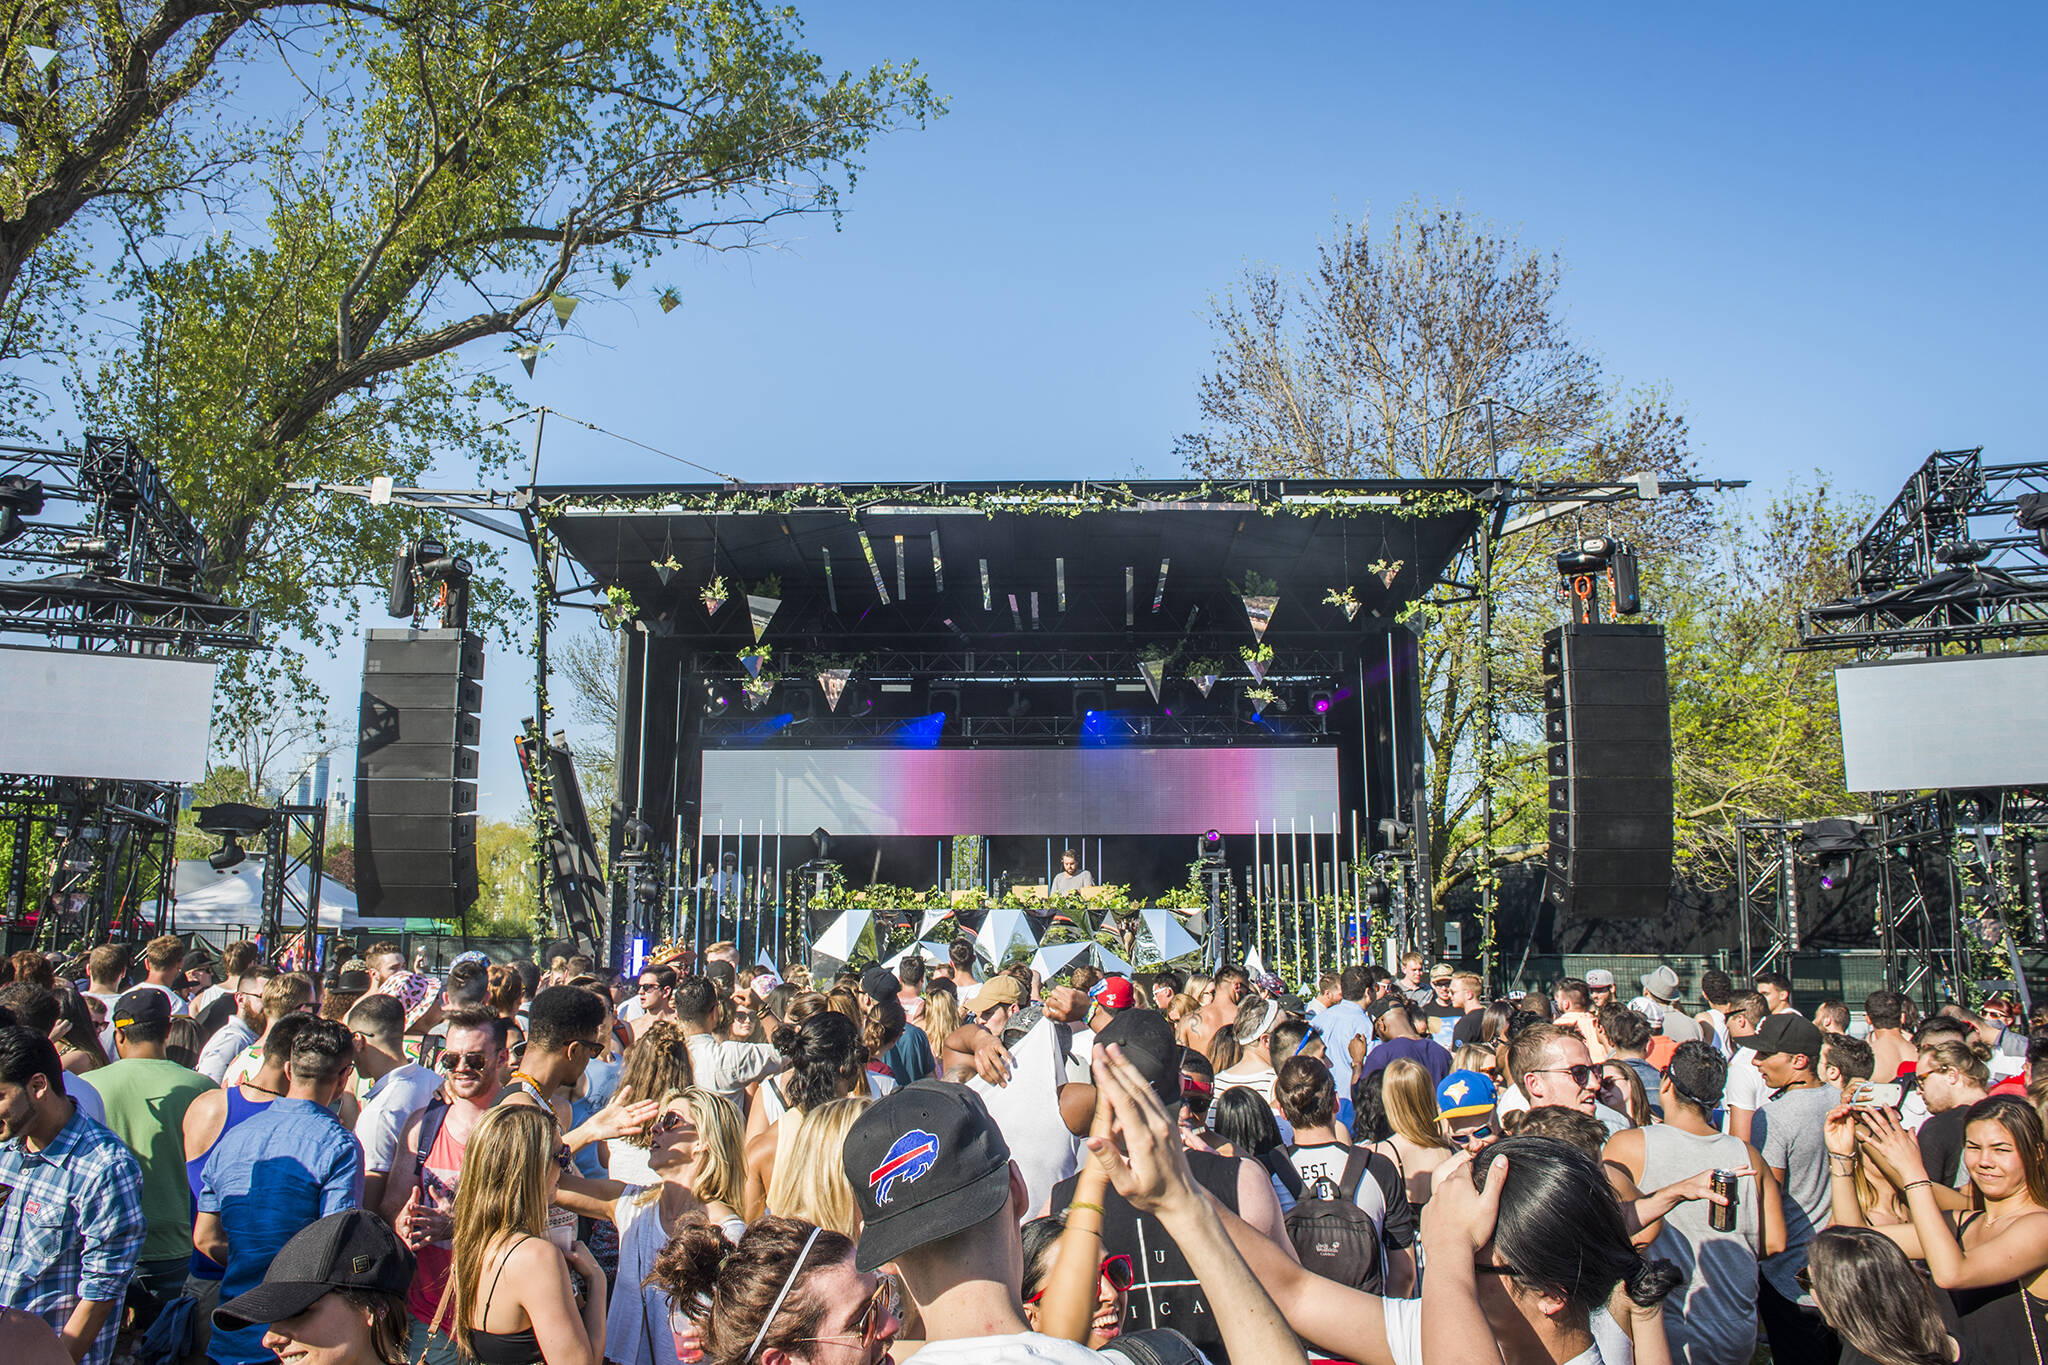 Summerlong music festival on Toronto Islands is expanding